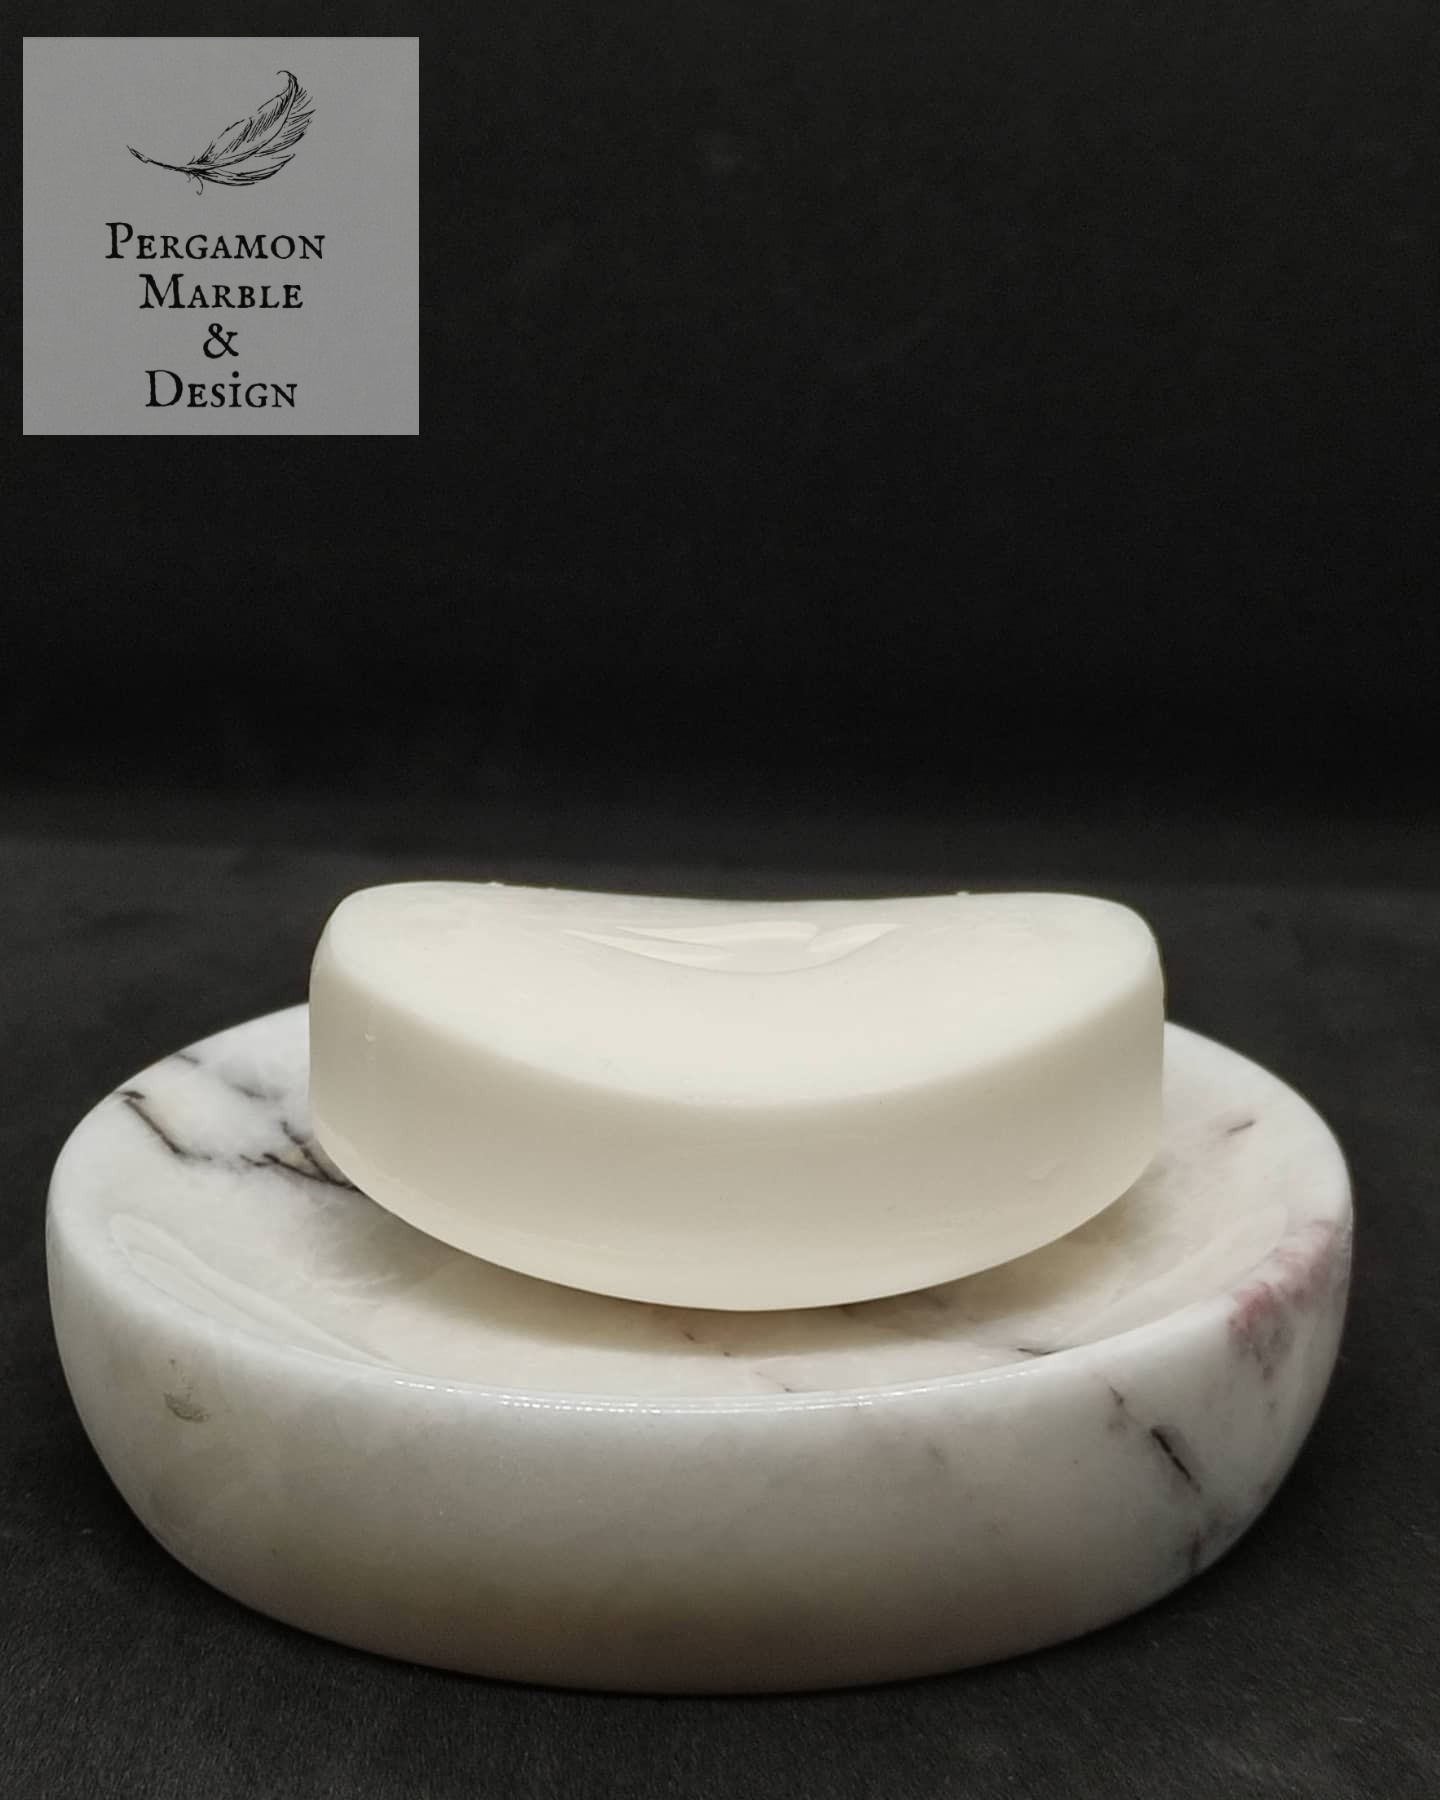 Aegean marble Solid soap dispenser 12 cm in diameter - Handmade